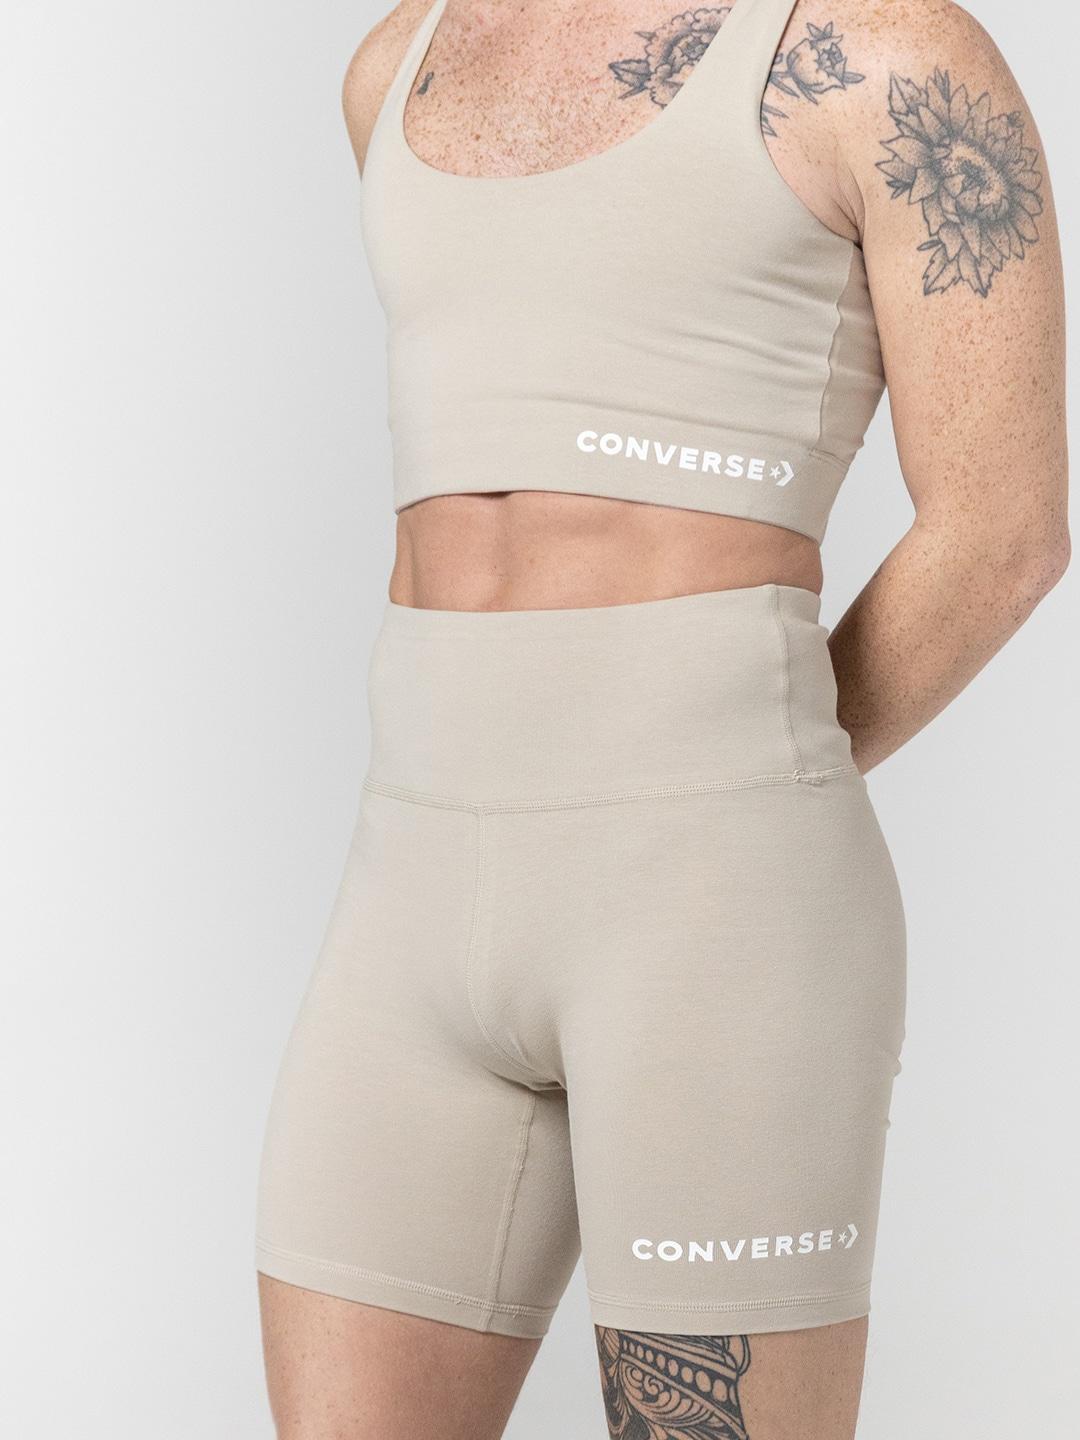 converse women high-rise pure cotton sports shorts